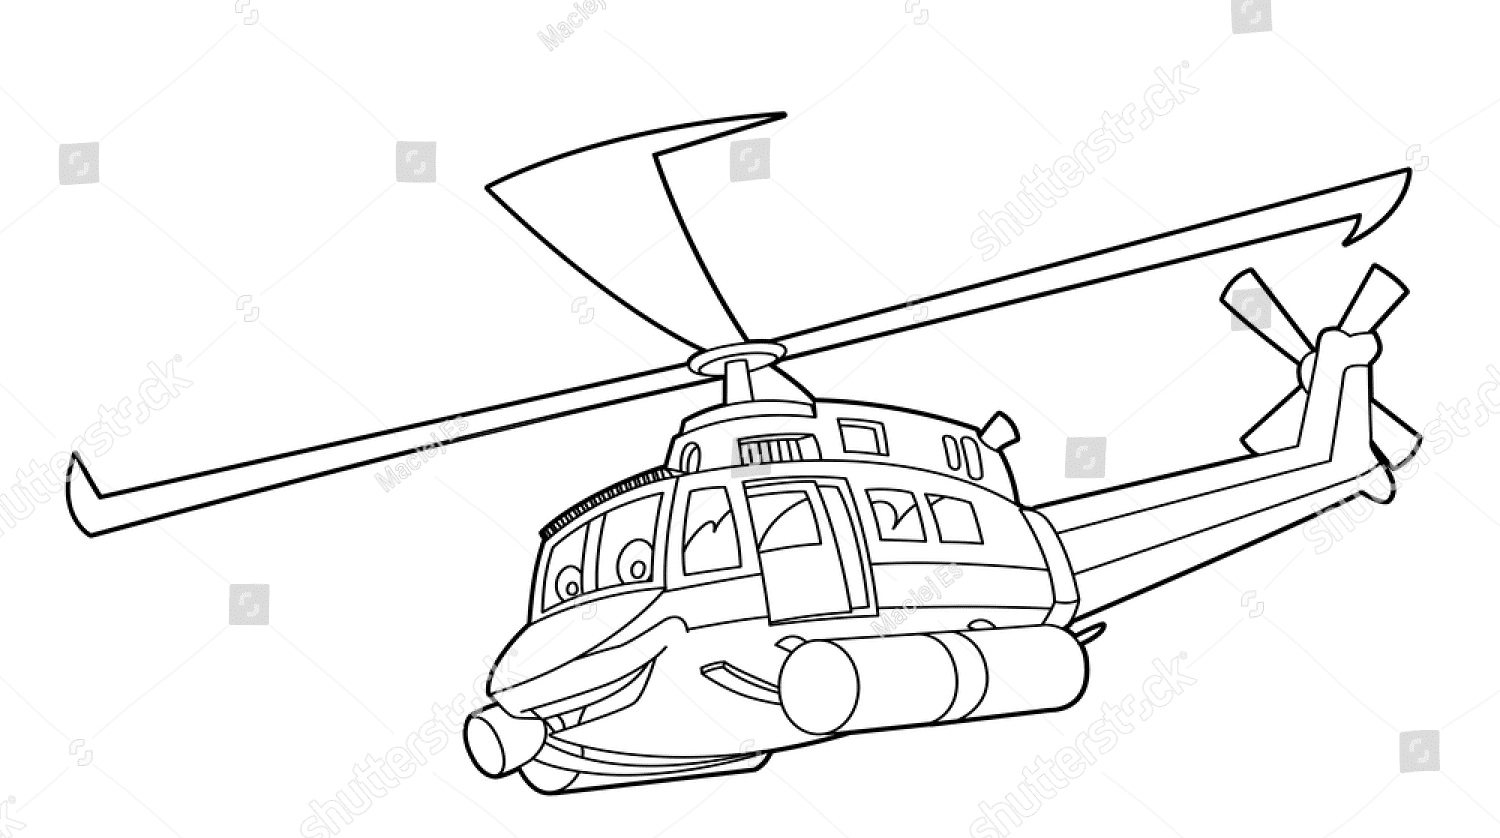 Helicóptero para crianças from Helicóptero